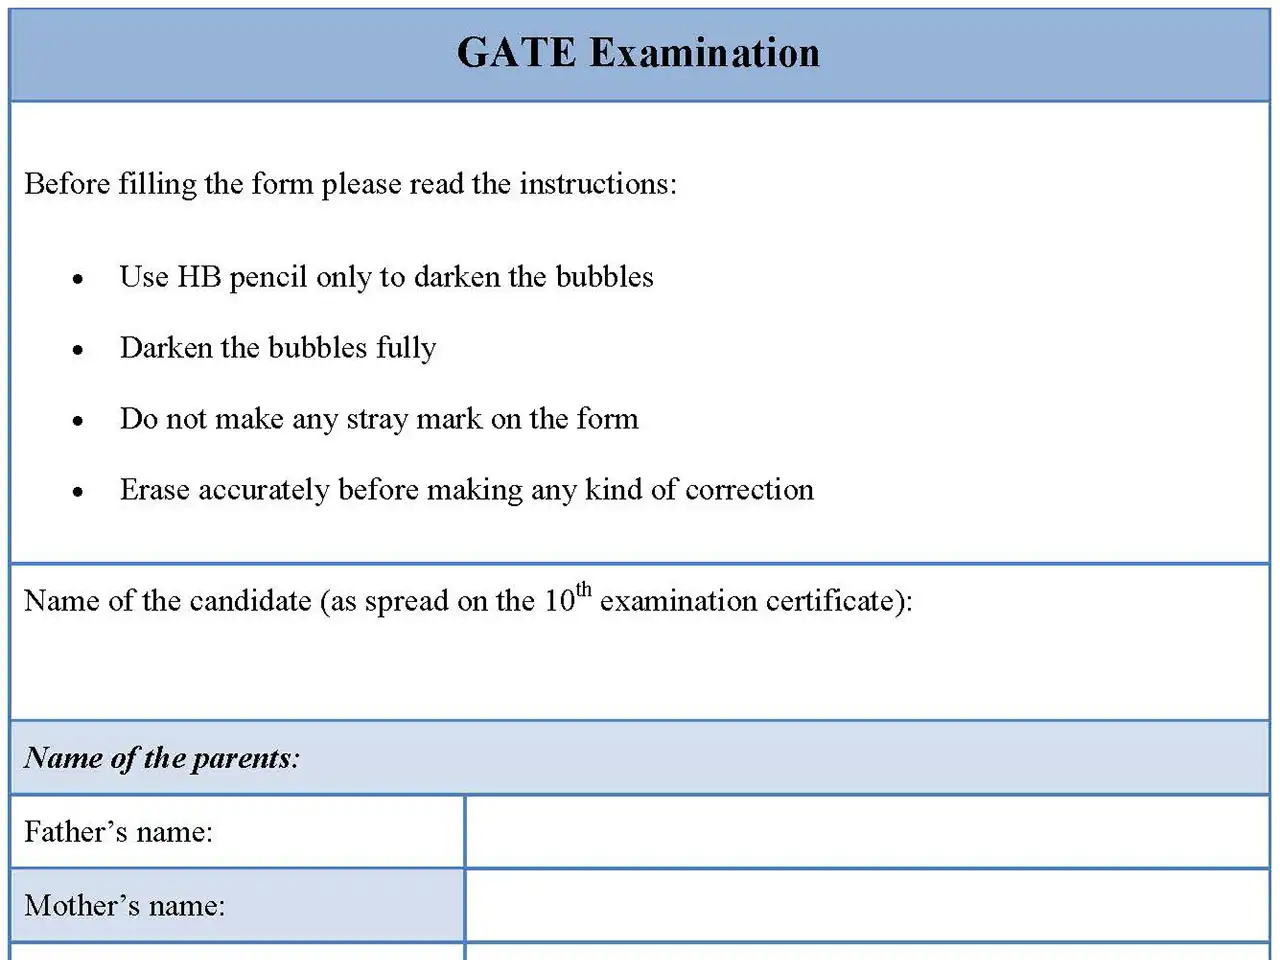 GATE Examination Form